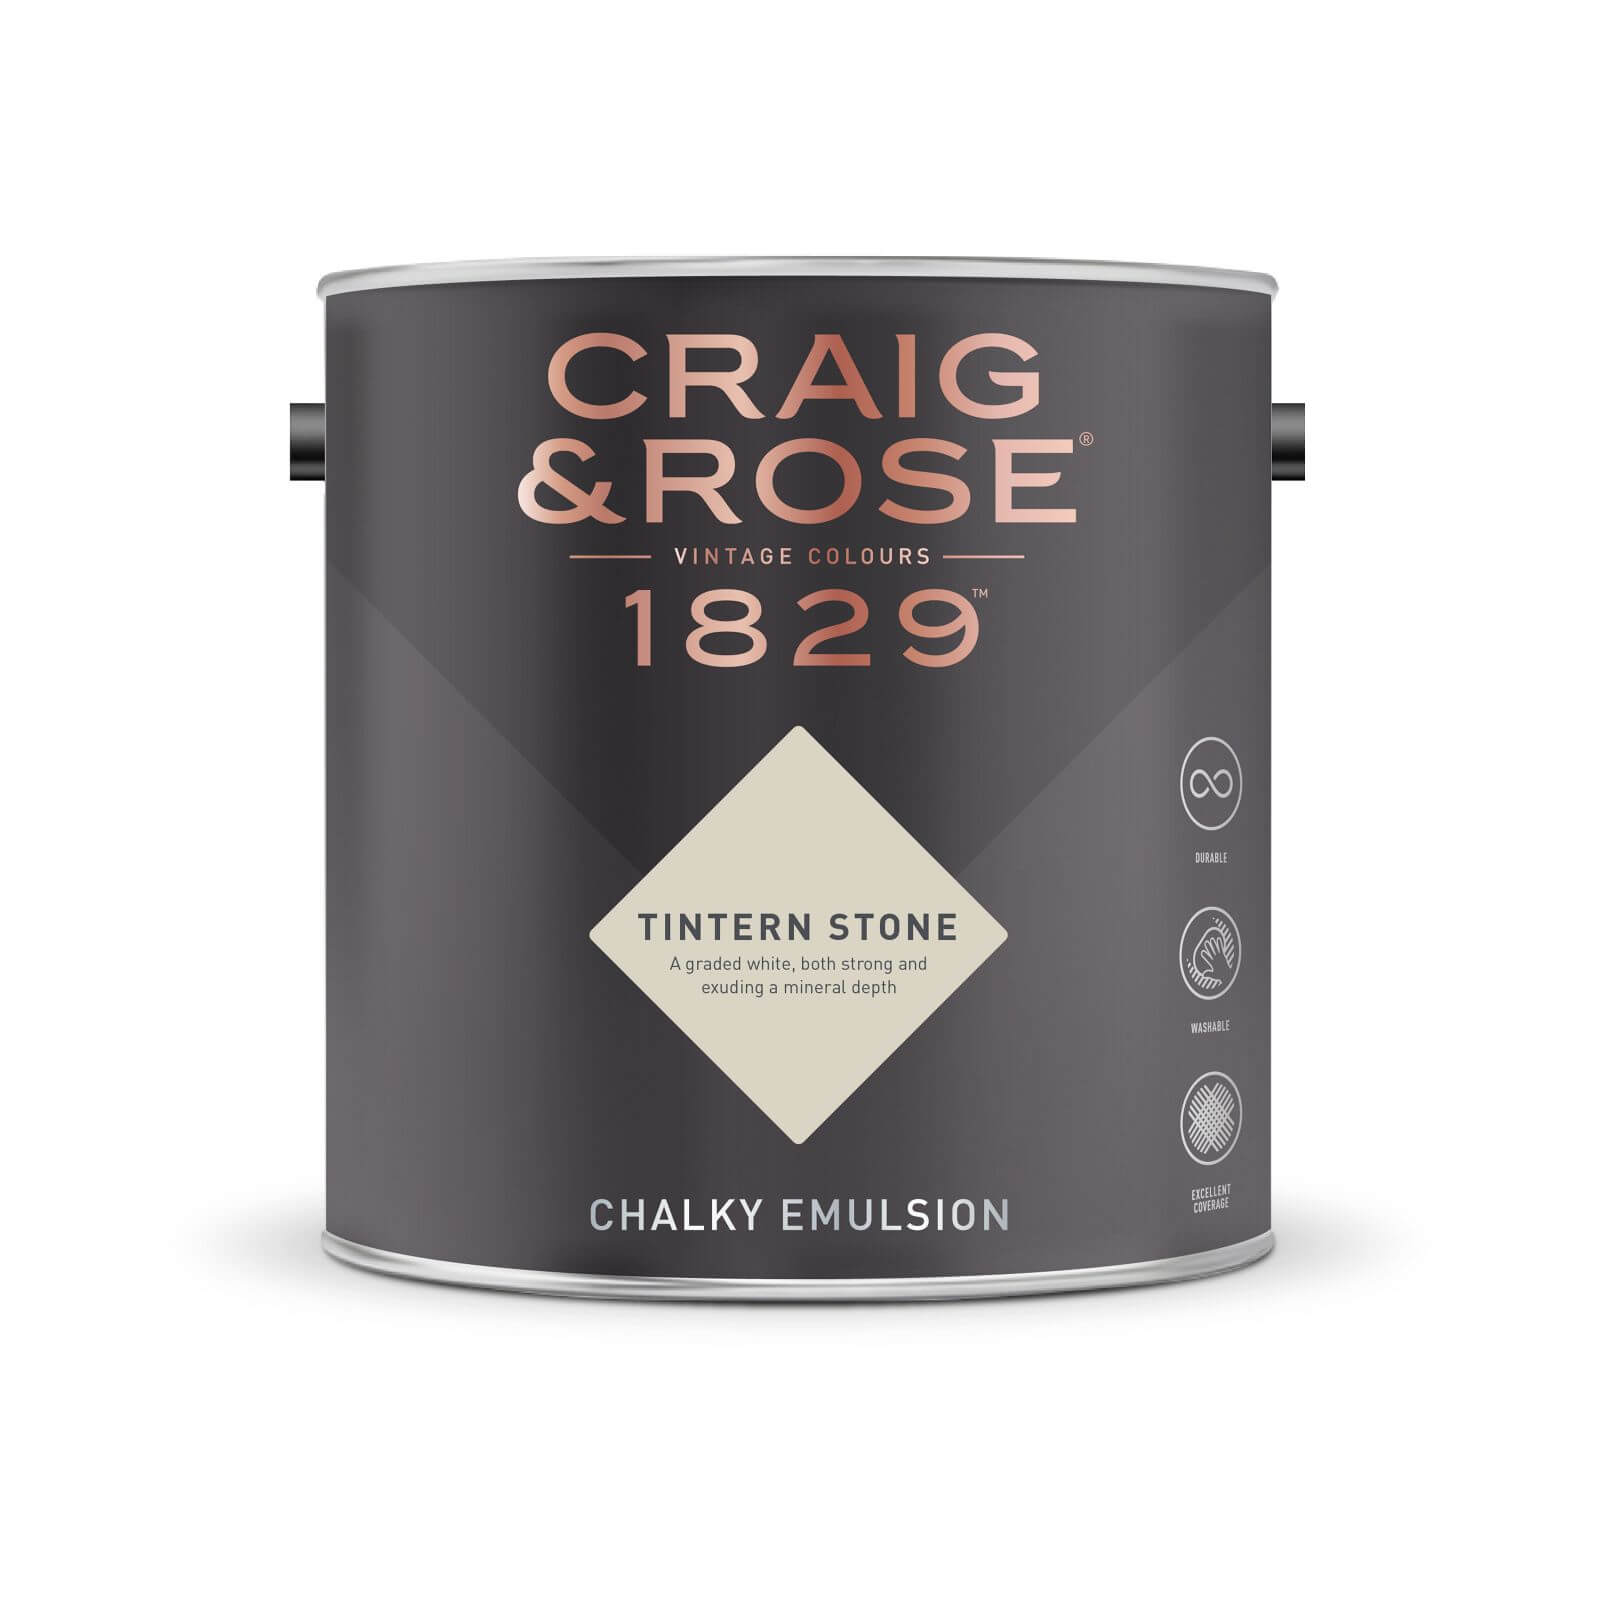 Craig & Rose 1829 Chalky Emulsion Paint Tintern Stone - Tester 50ml